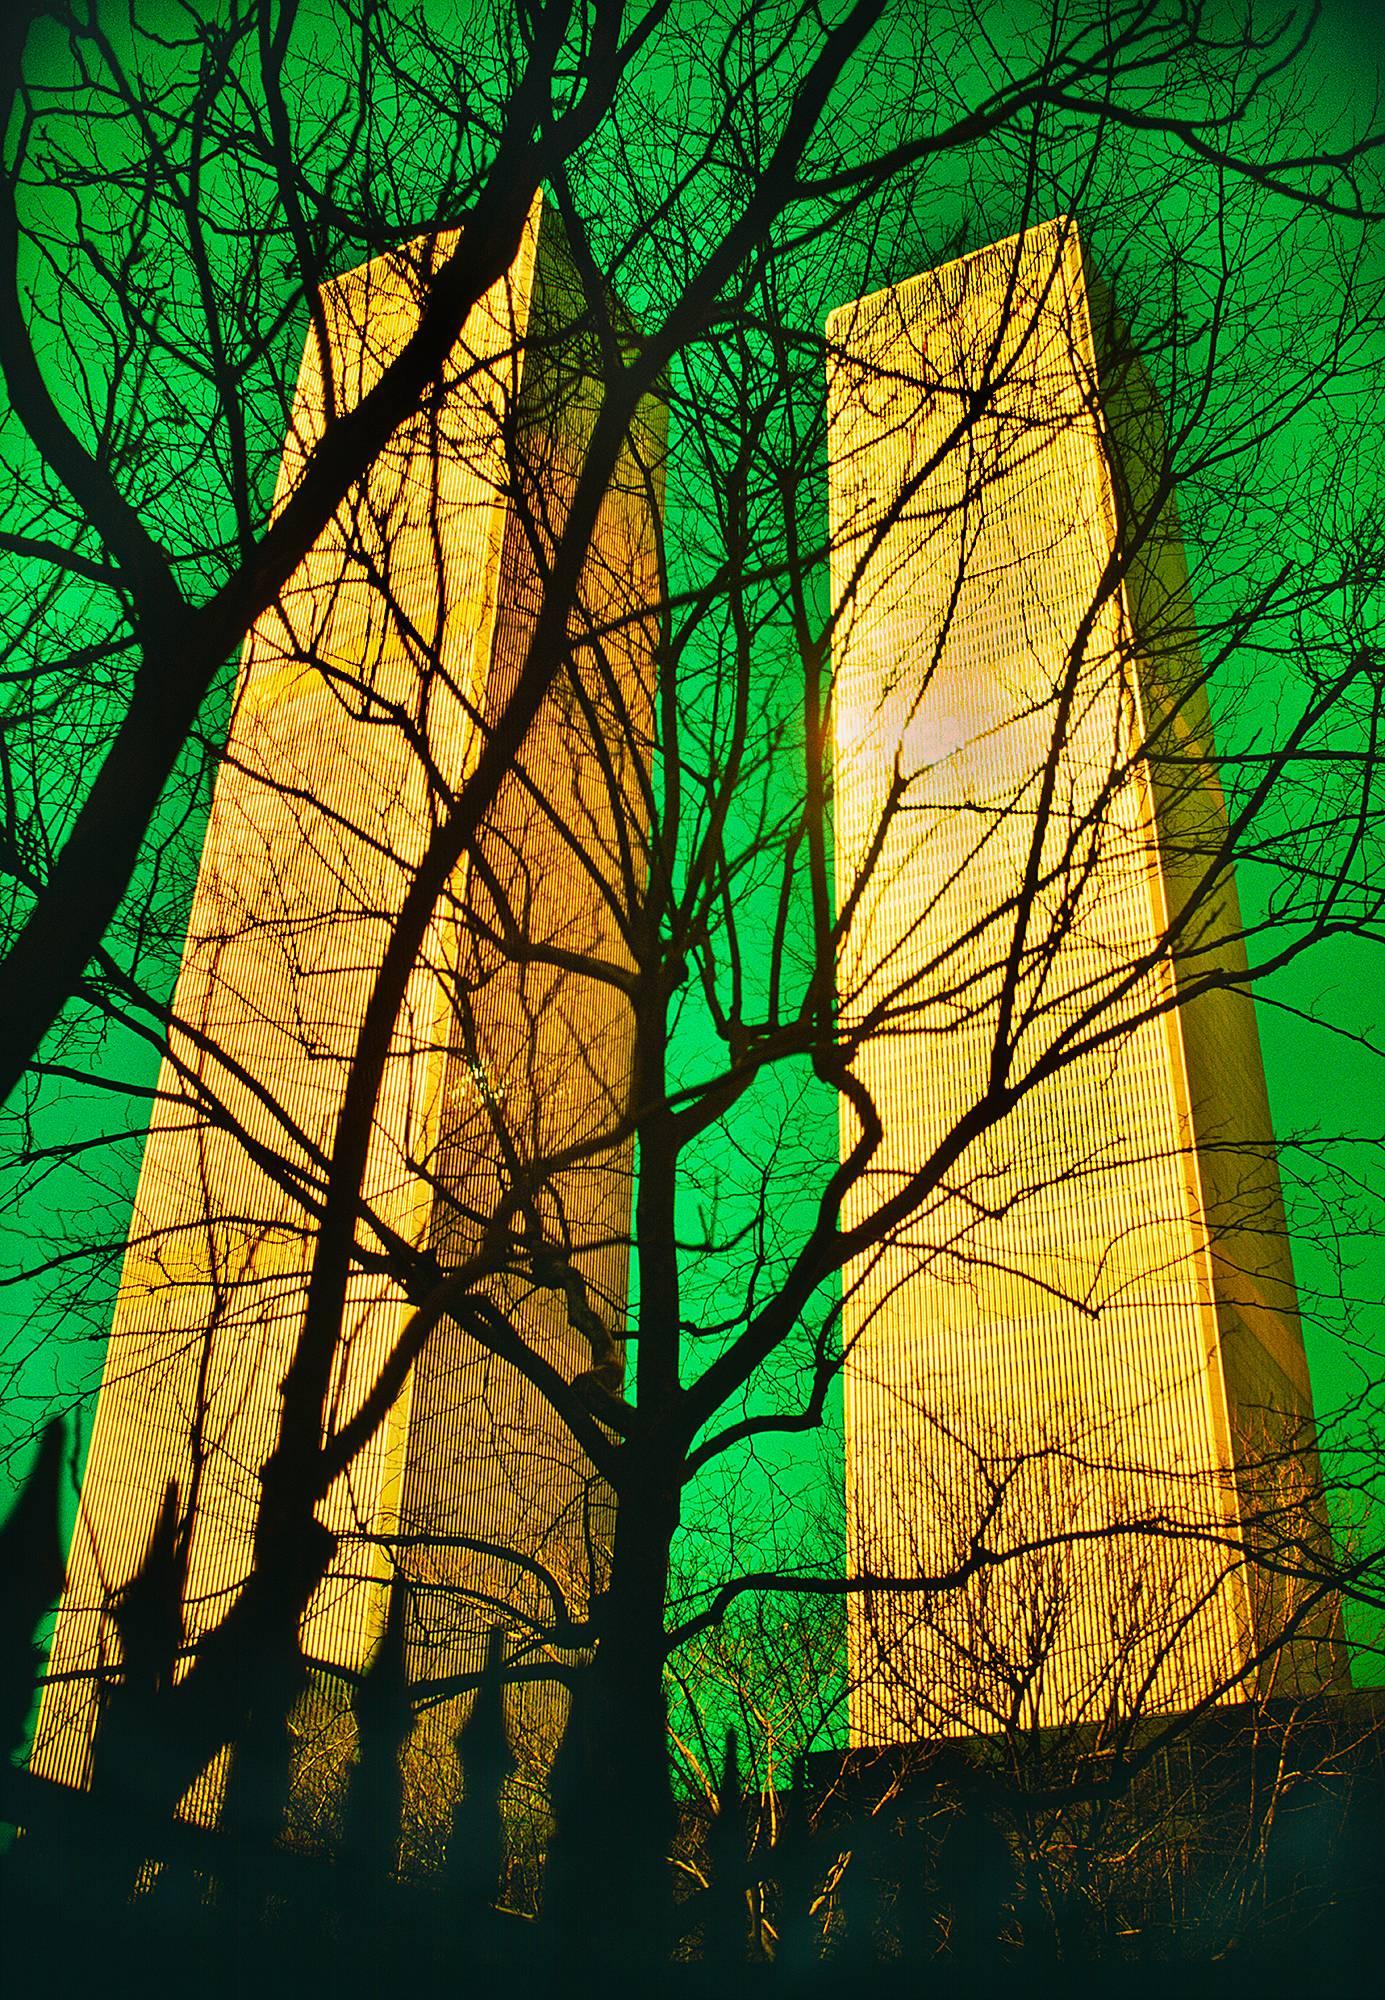 Color Photograph Mitchell Funk - Tours jumelles, World Trade Center avec filtre vert